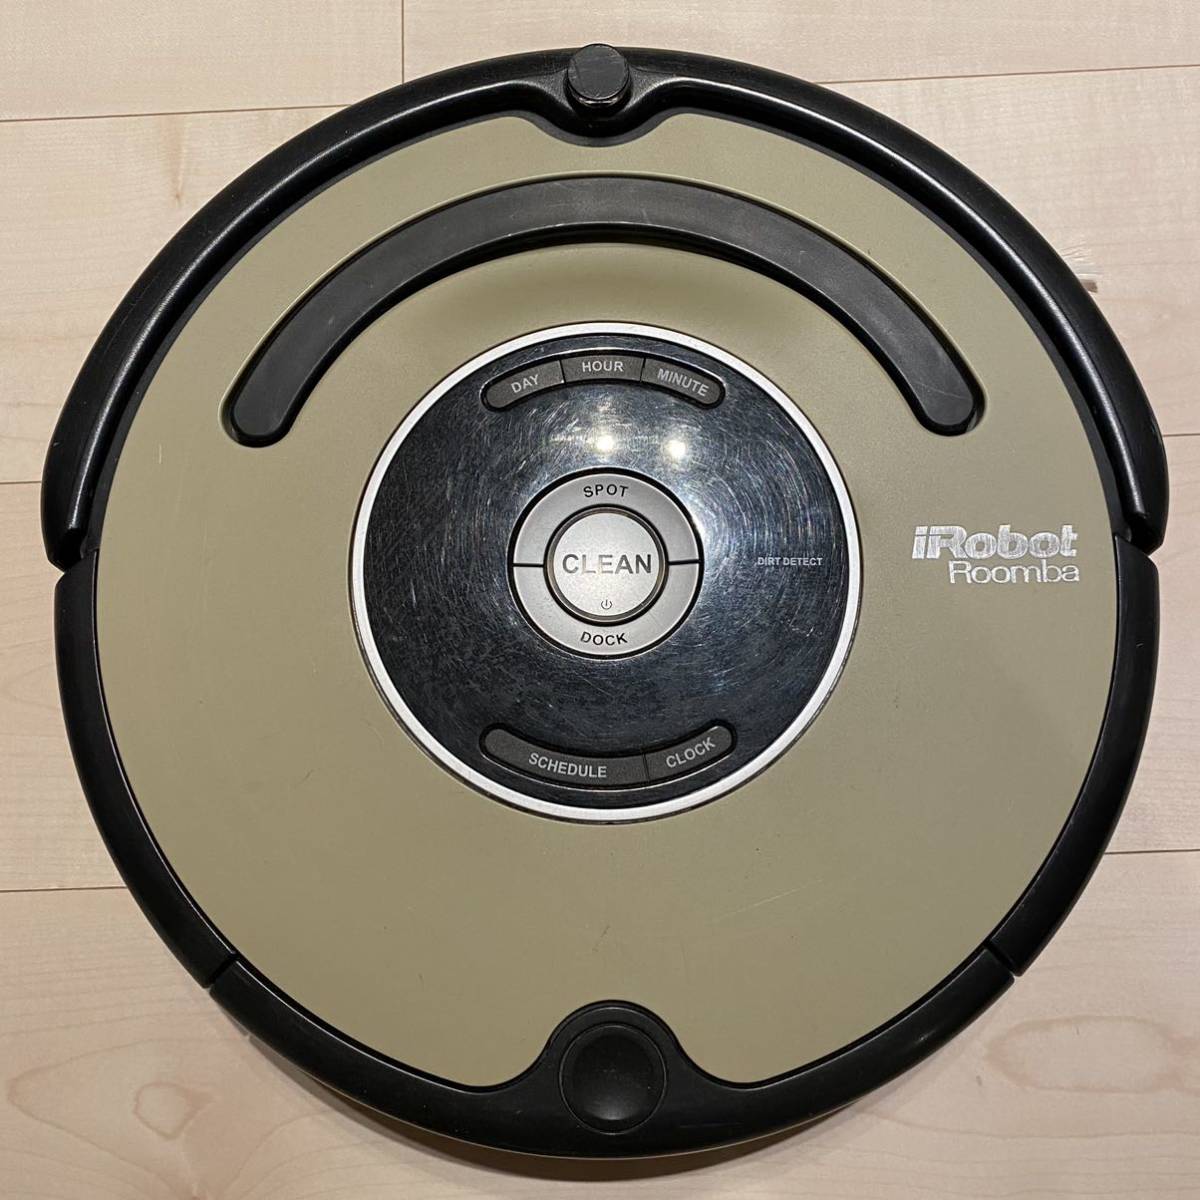 iRobot 話題の行列 【メーカー直売】 Roomba 500シリーズ アイロボット